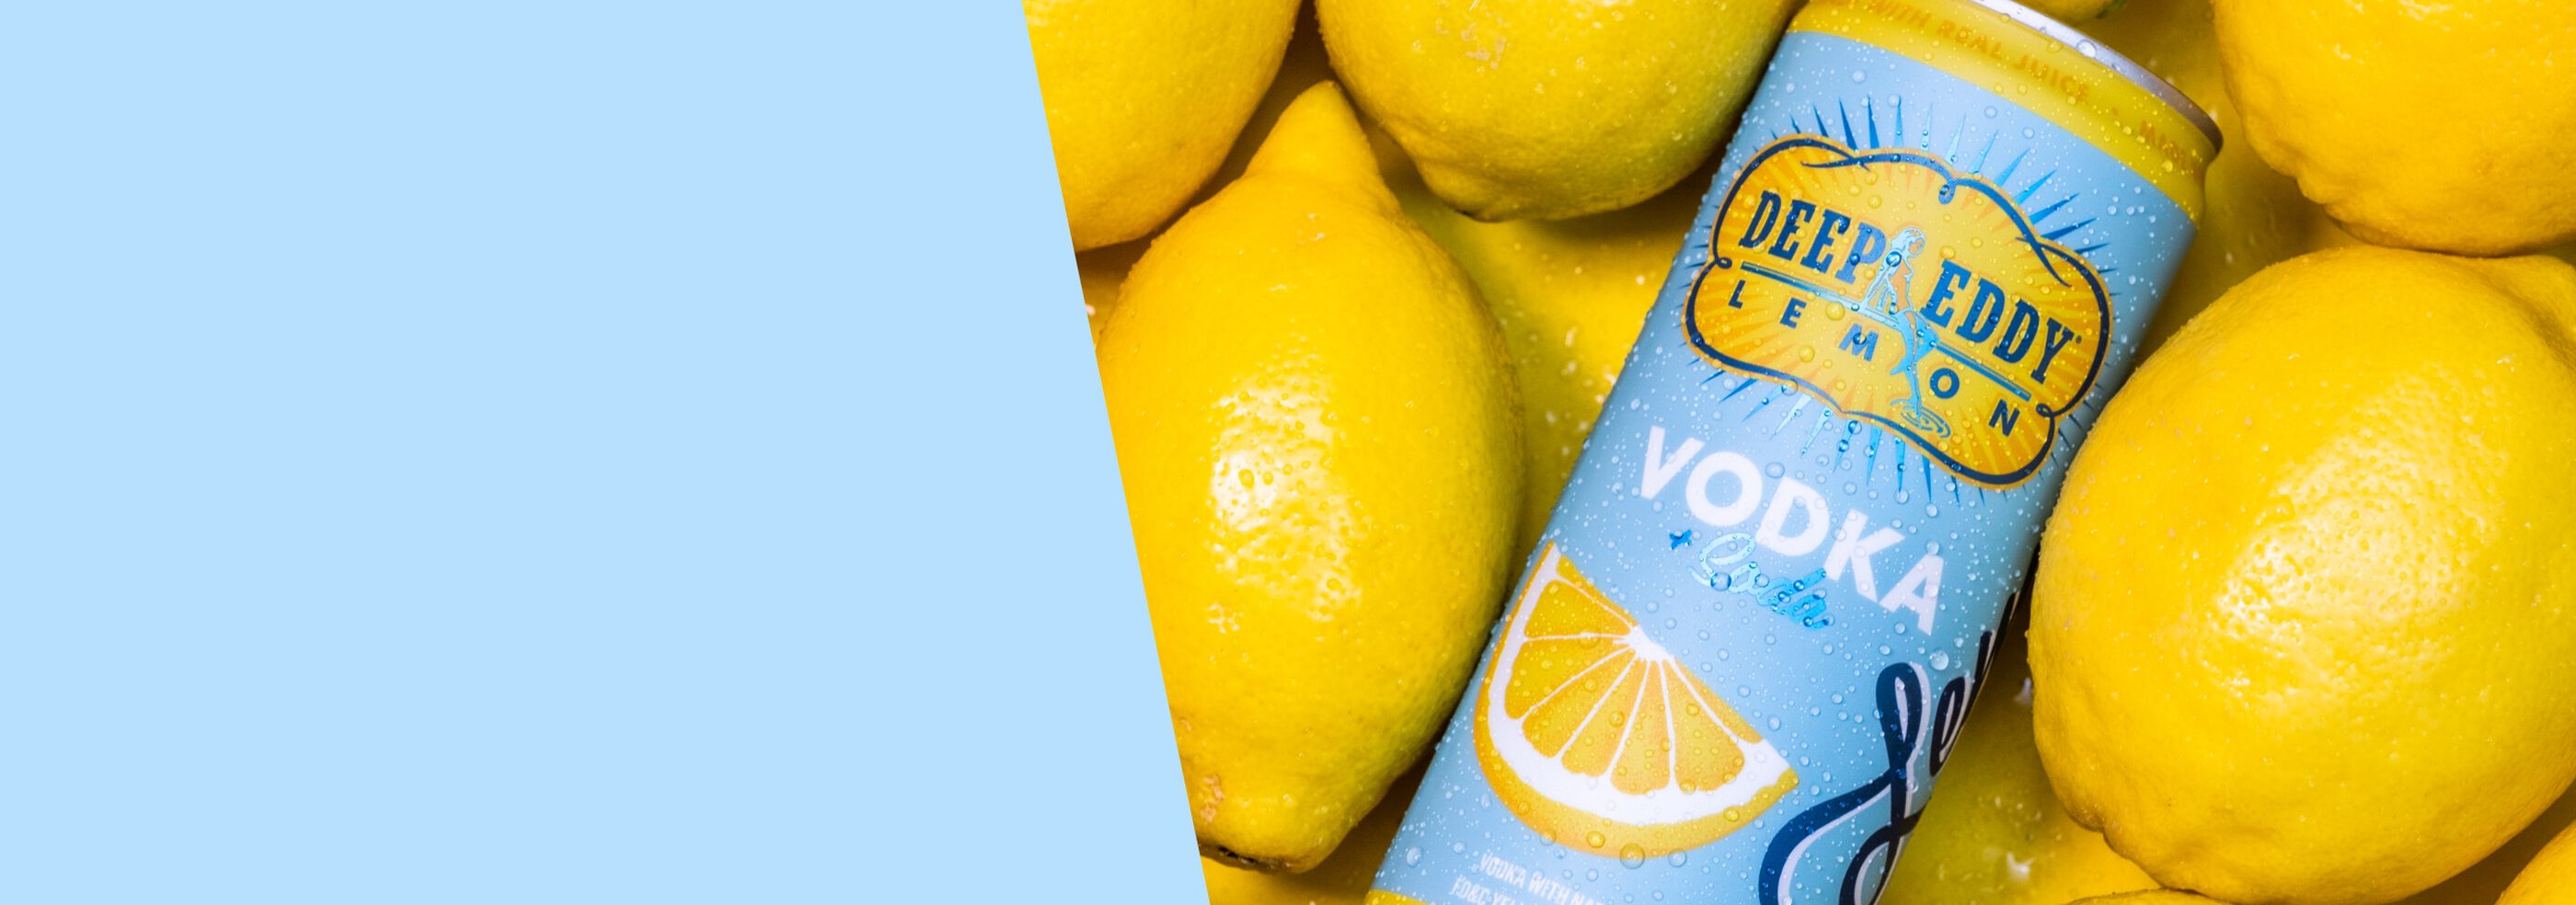 Can of Deep Eddy Lemon Vodka + Soda laying on lemons